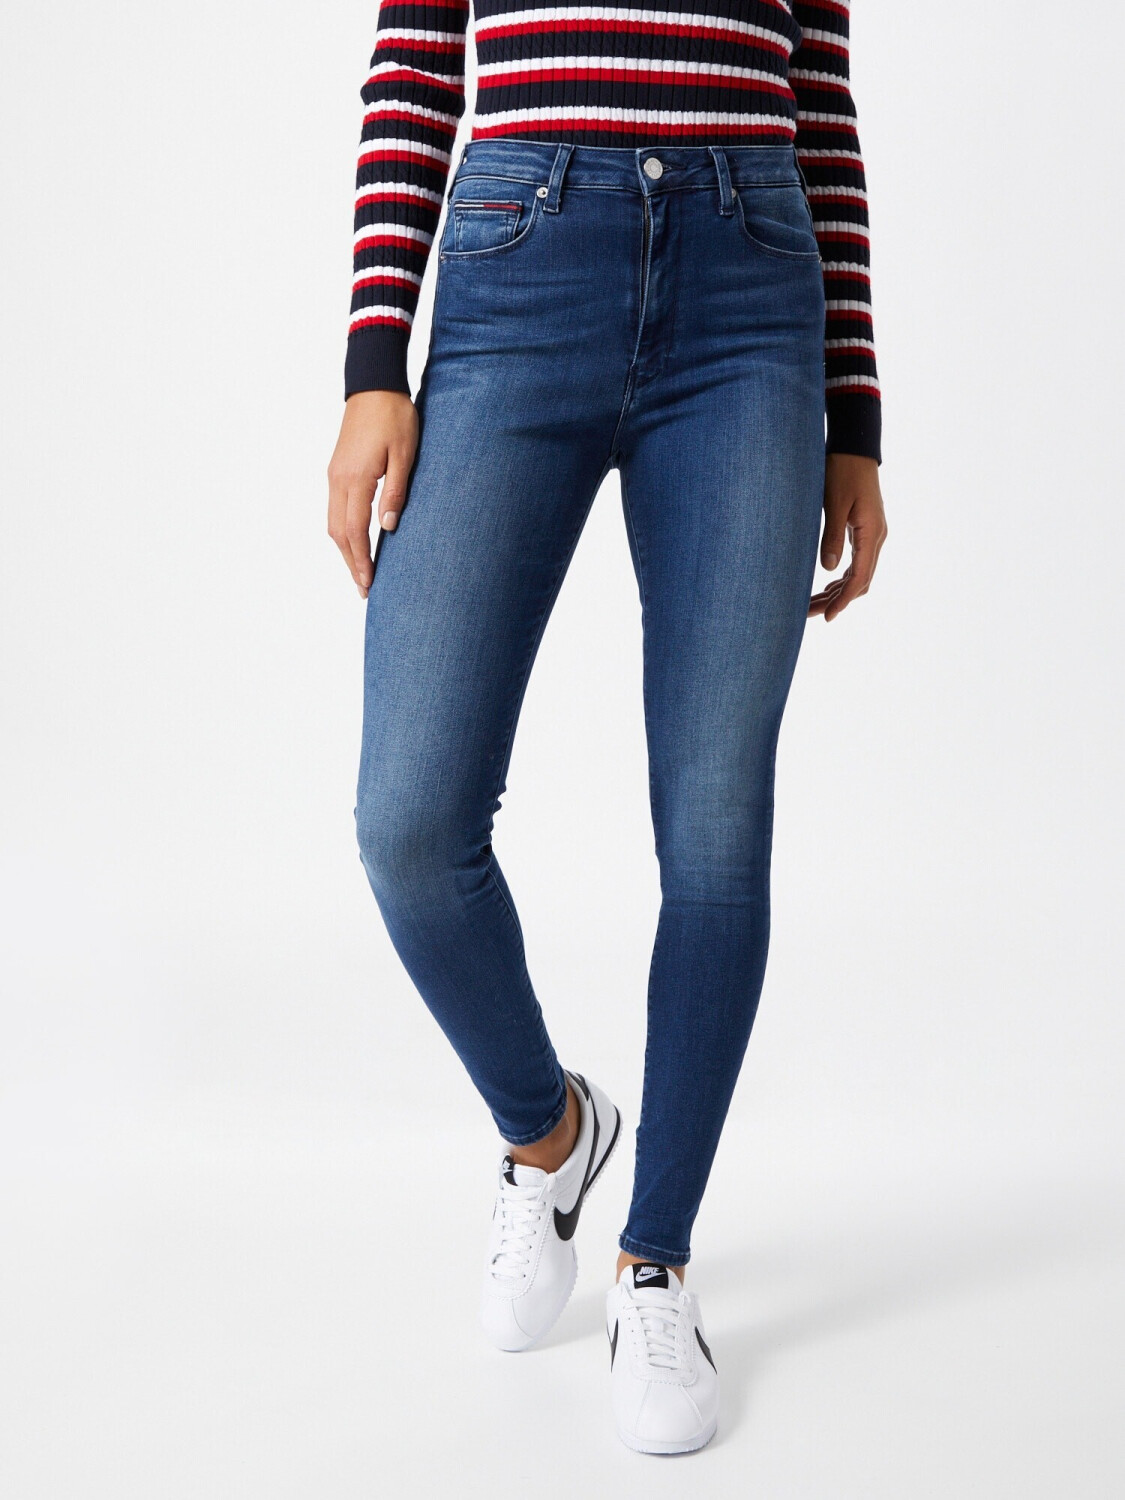 Tommy Hilfiger Sylvia High Rise Super Skinny Fit Jeans new niceville mid  blue stretch ab 53,74 € | Preisvergleich bei